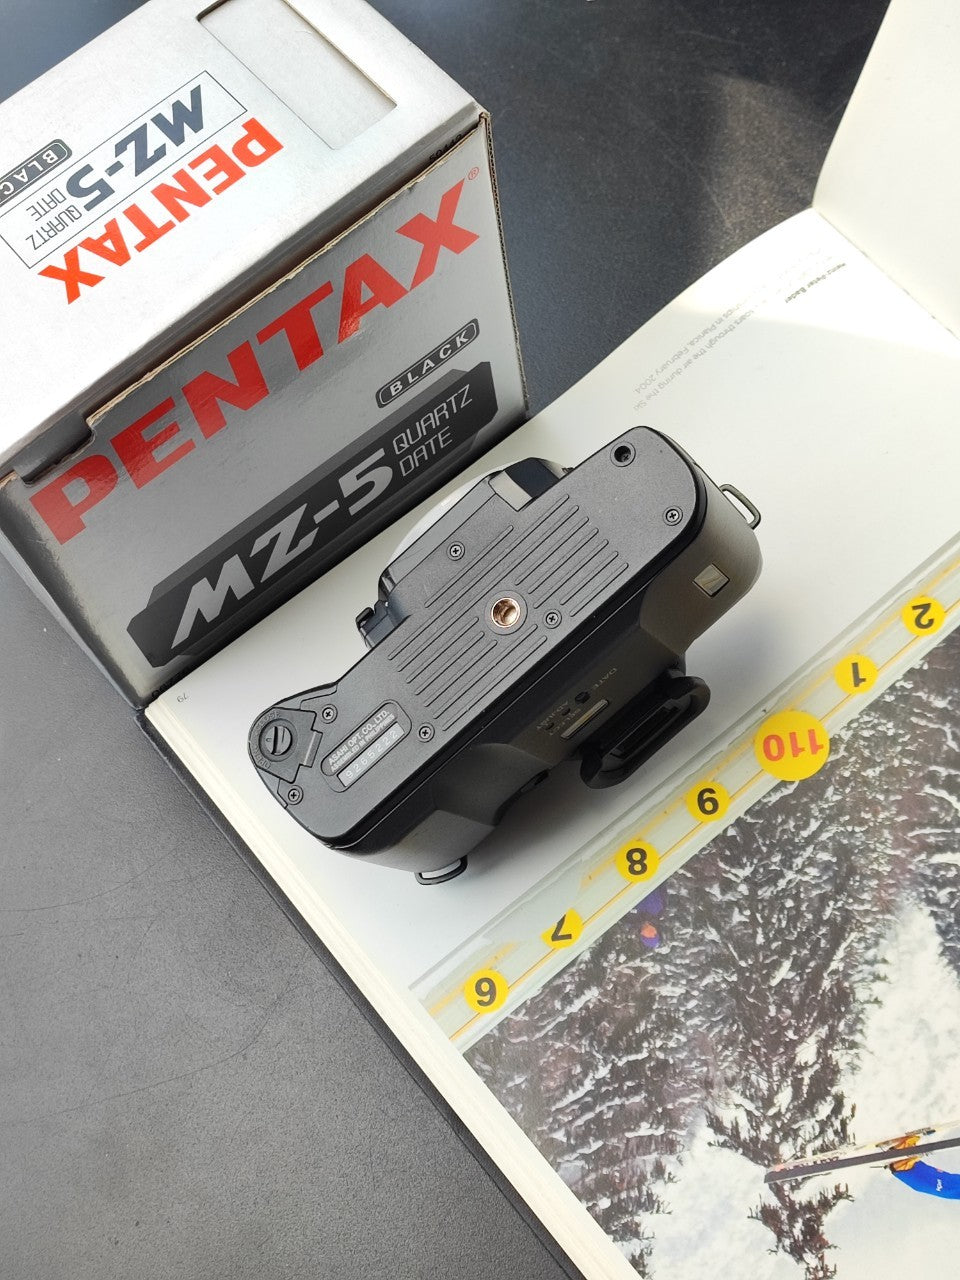 Pentax MZ-5 with box